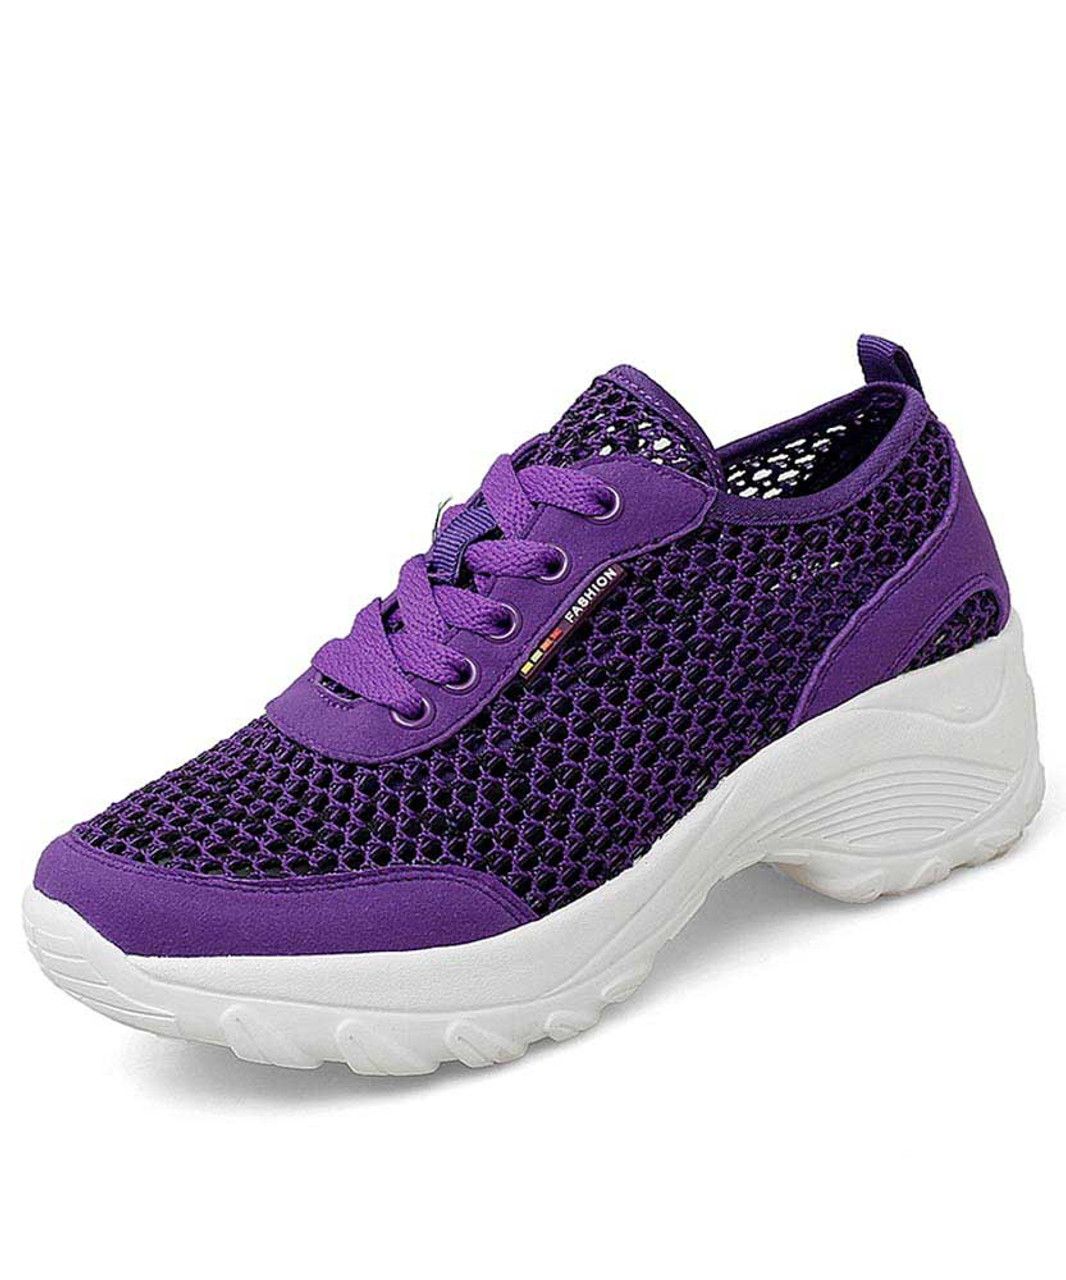 purple shoes ireland